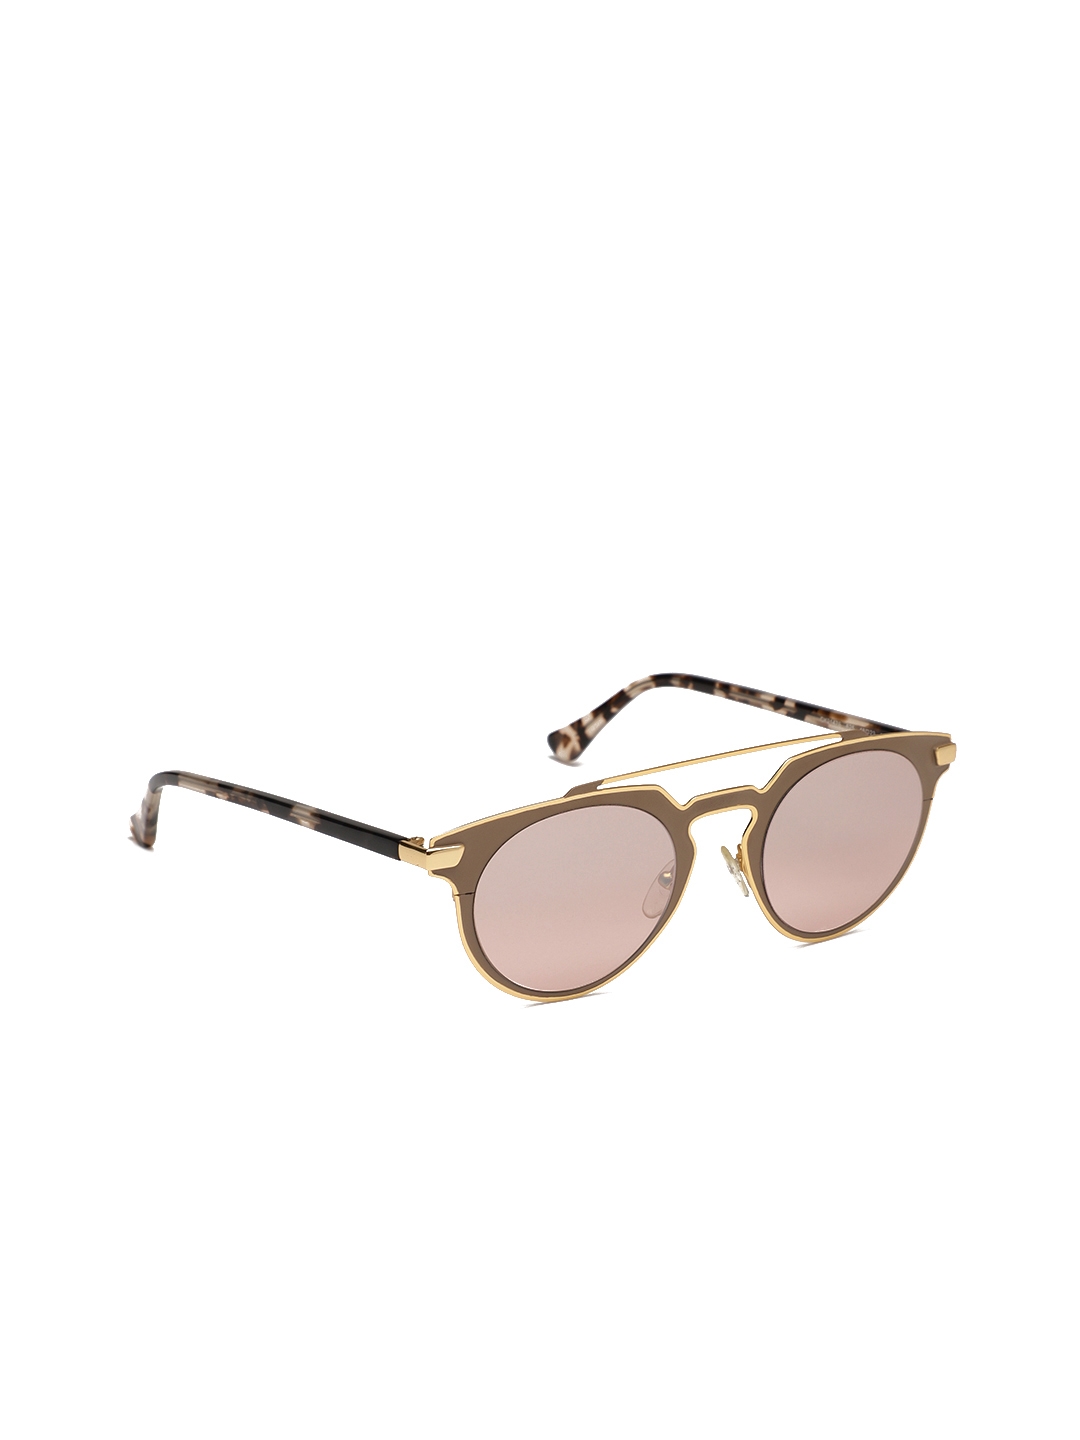 Calvin Klein designer sunglasses | Feel Good Contacts UK-tuongthan.vn